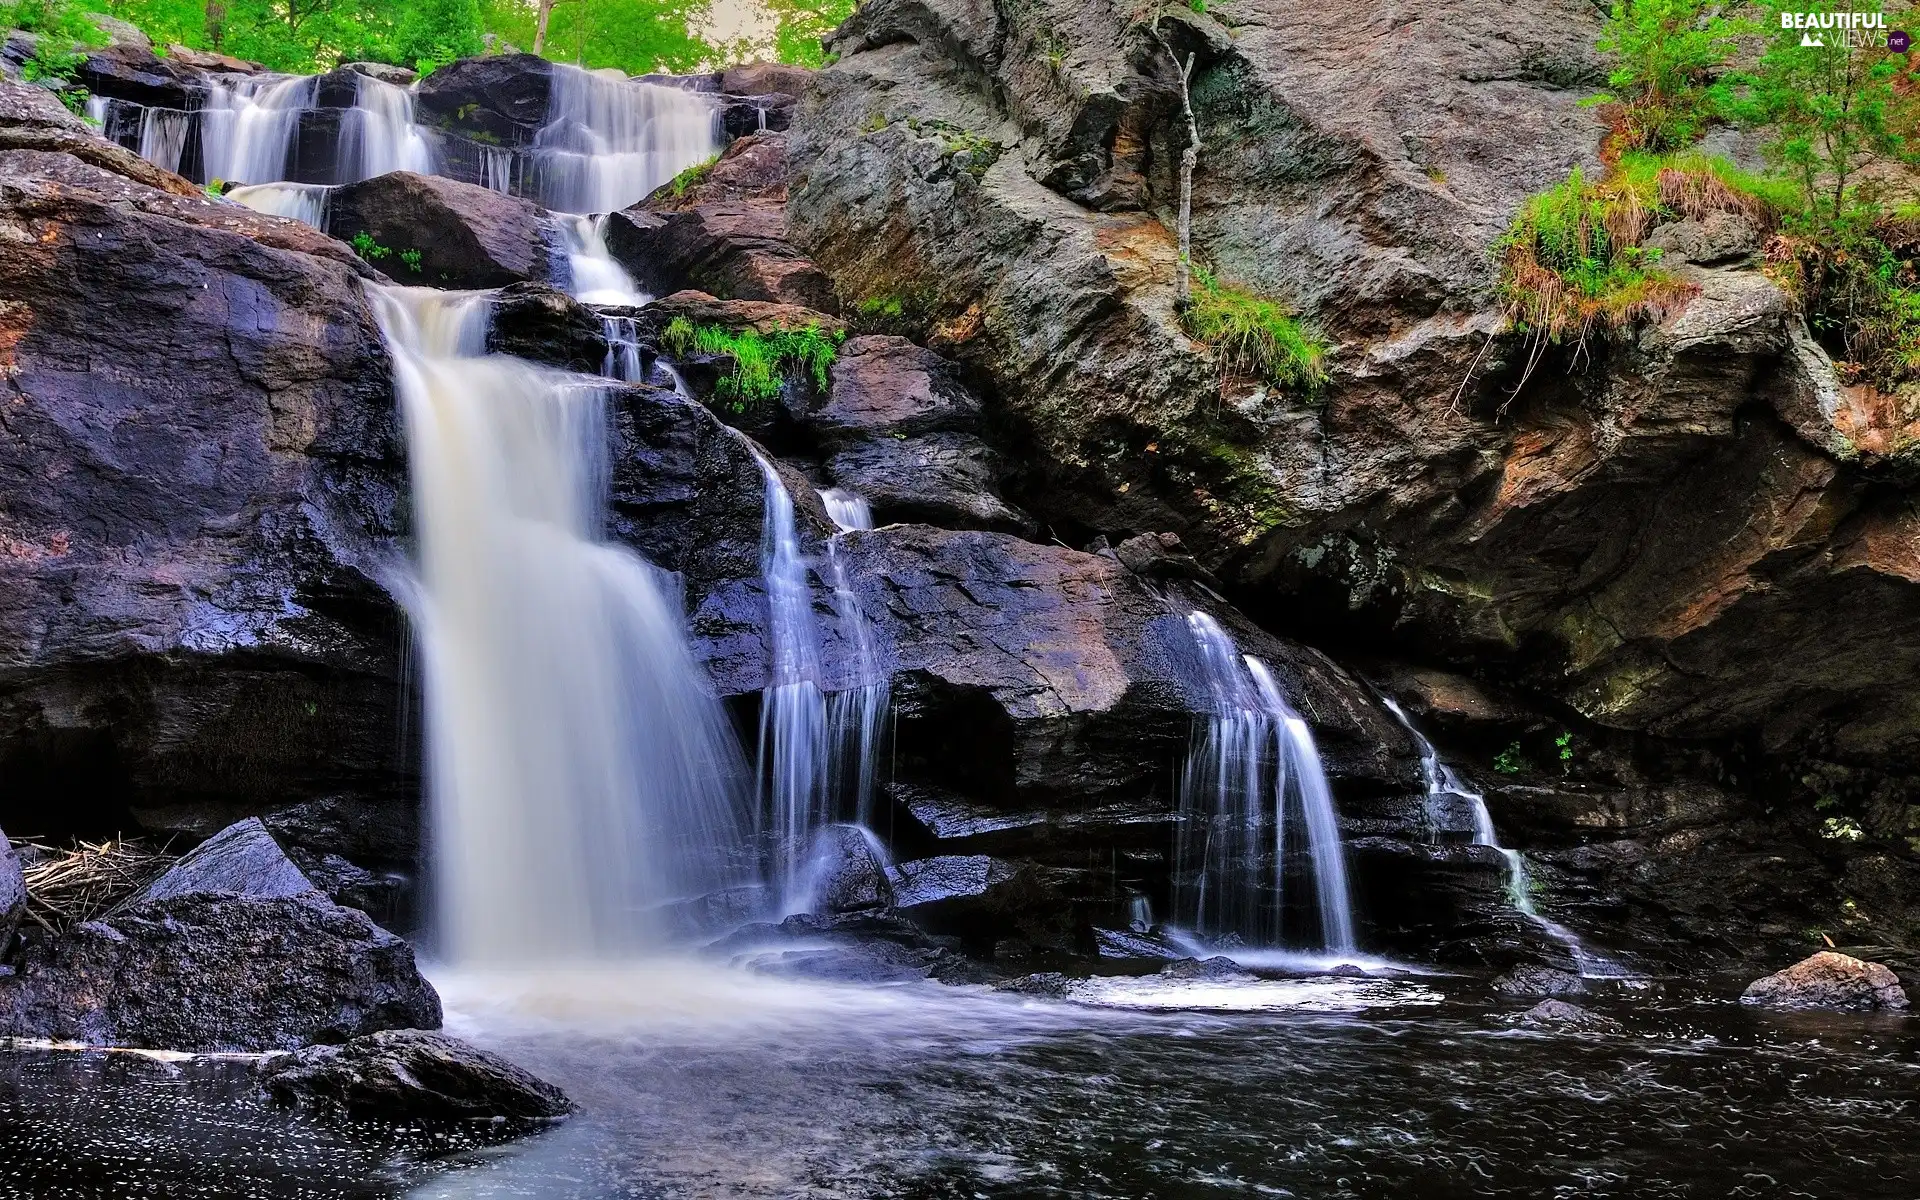 River, waterfall, rocks